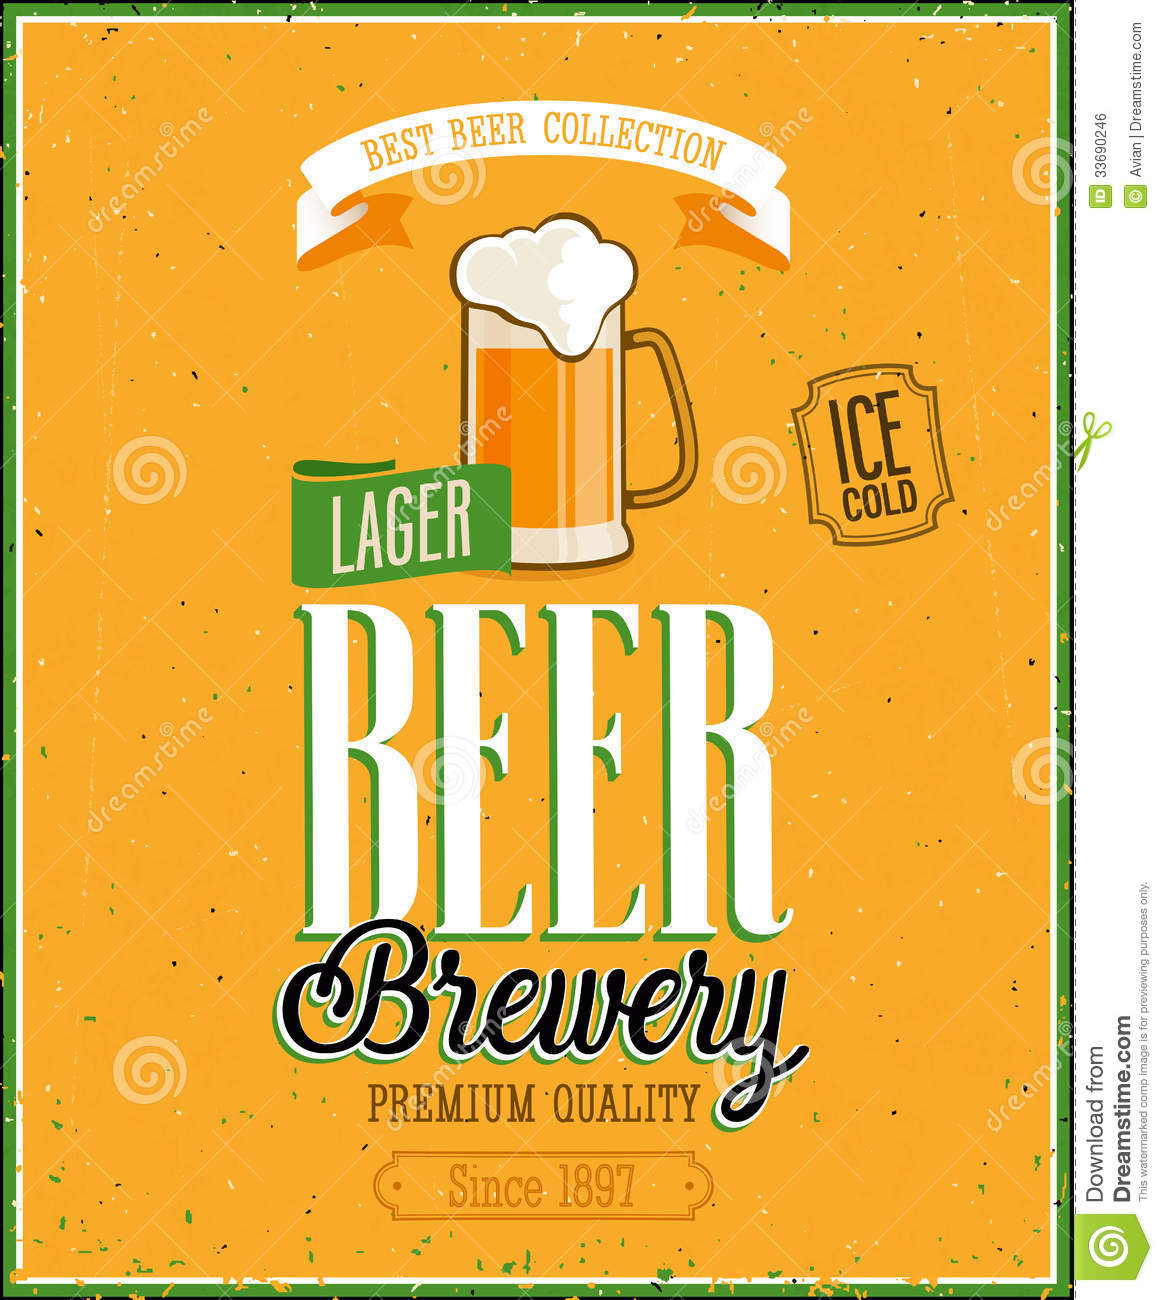 Vintage Beer Brewery Poster  Royalty Free Stock Image   Image    